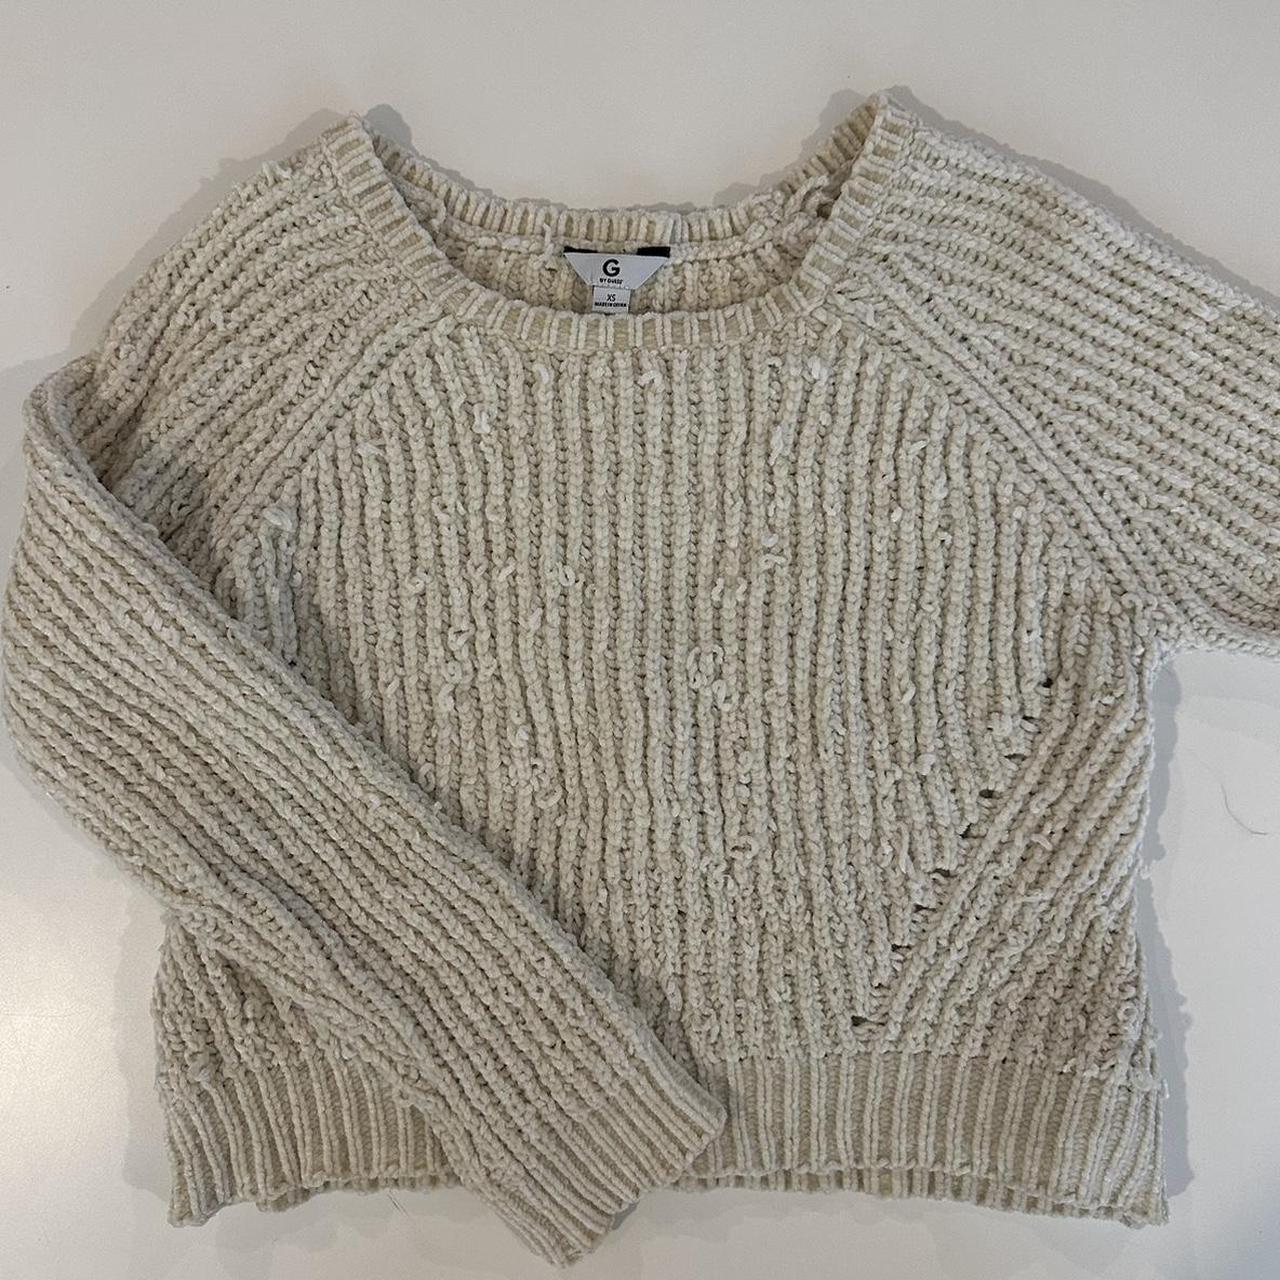 Guess XS sweater Super soft & fun knit pattern - Depop